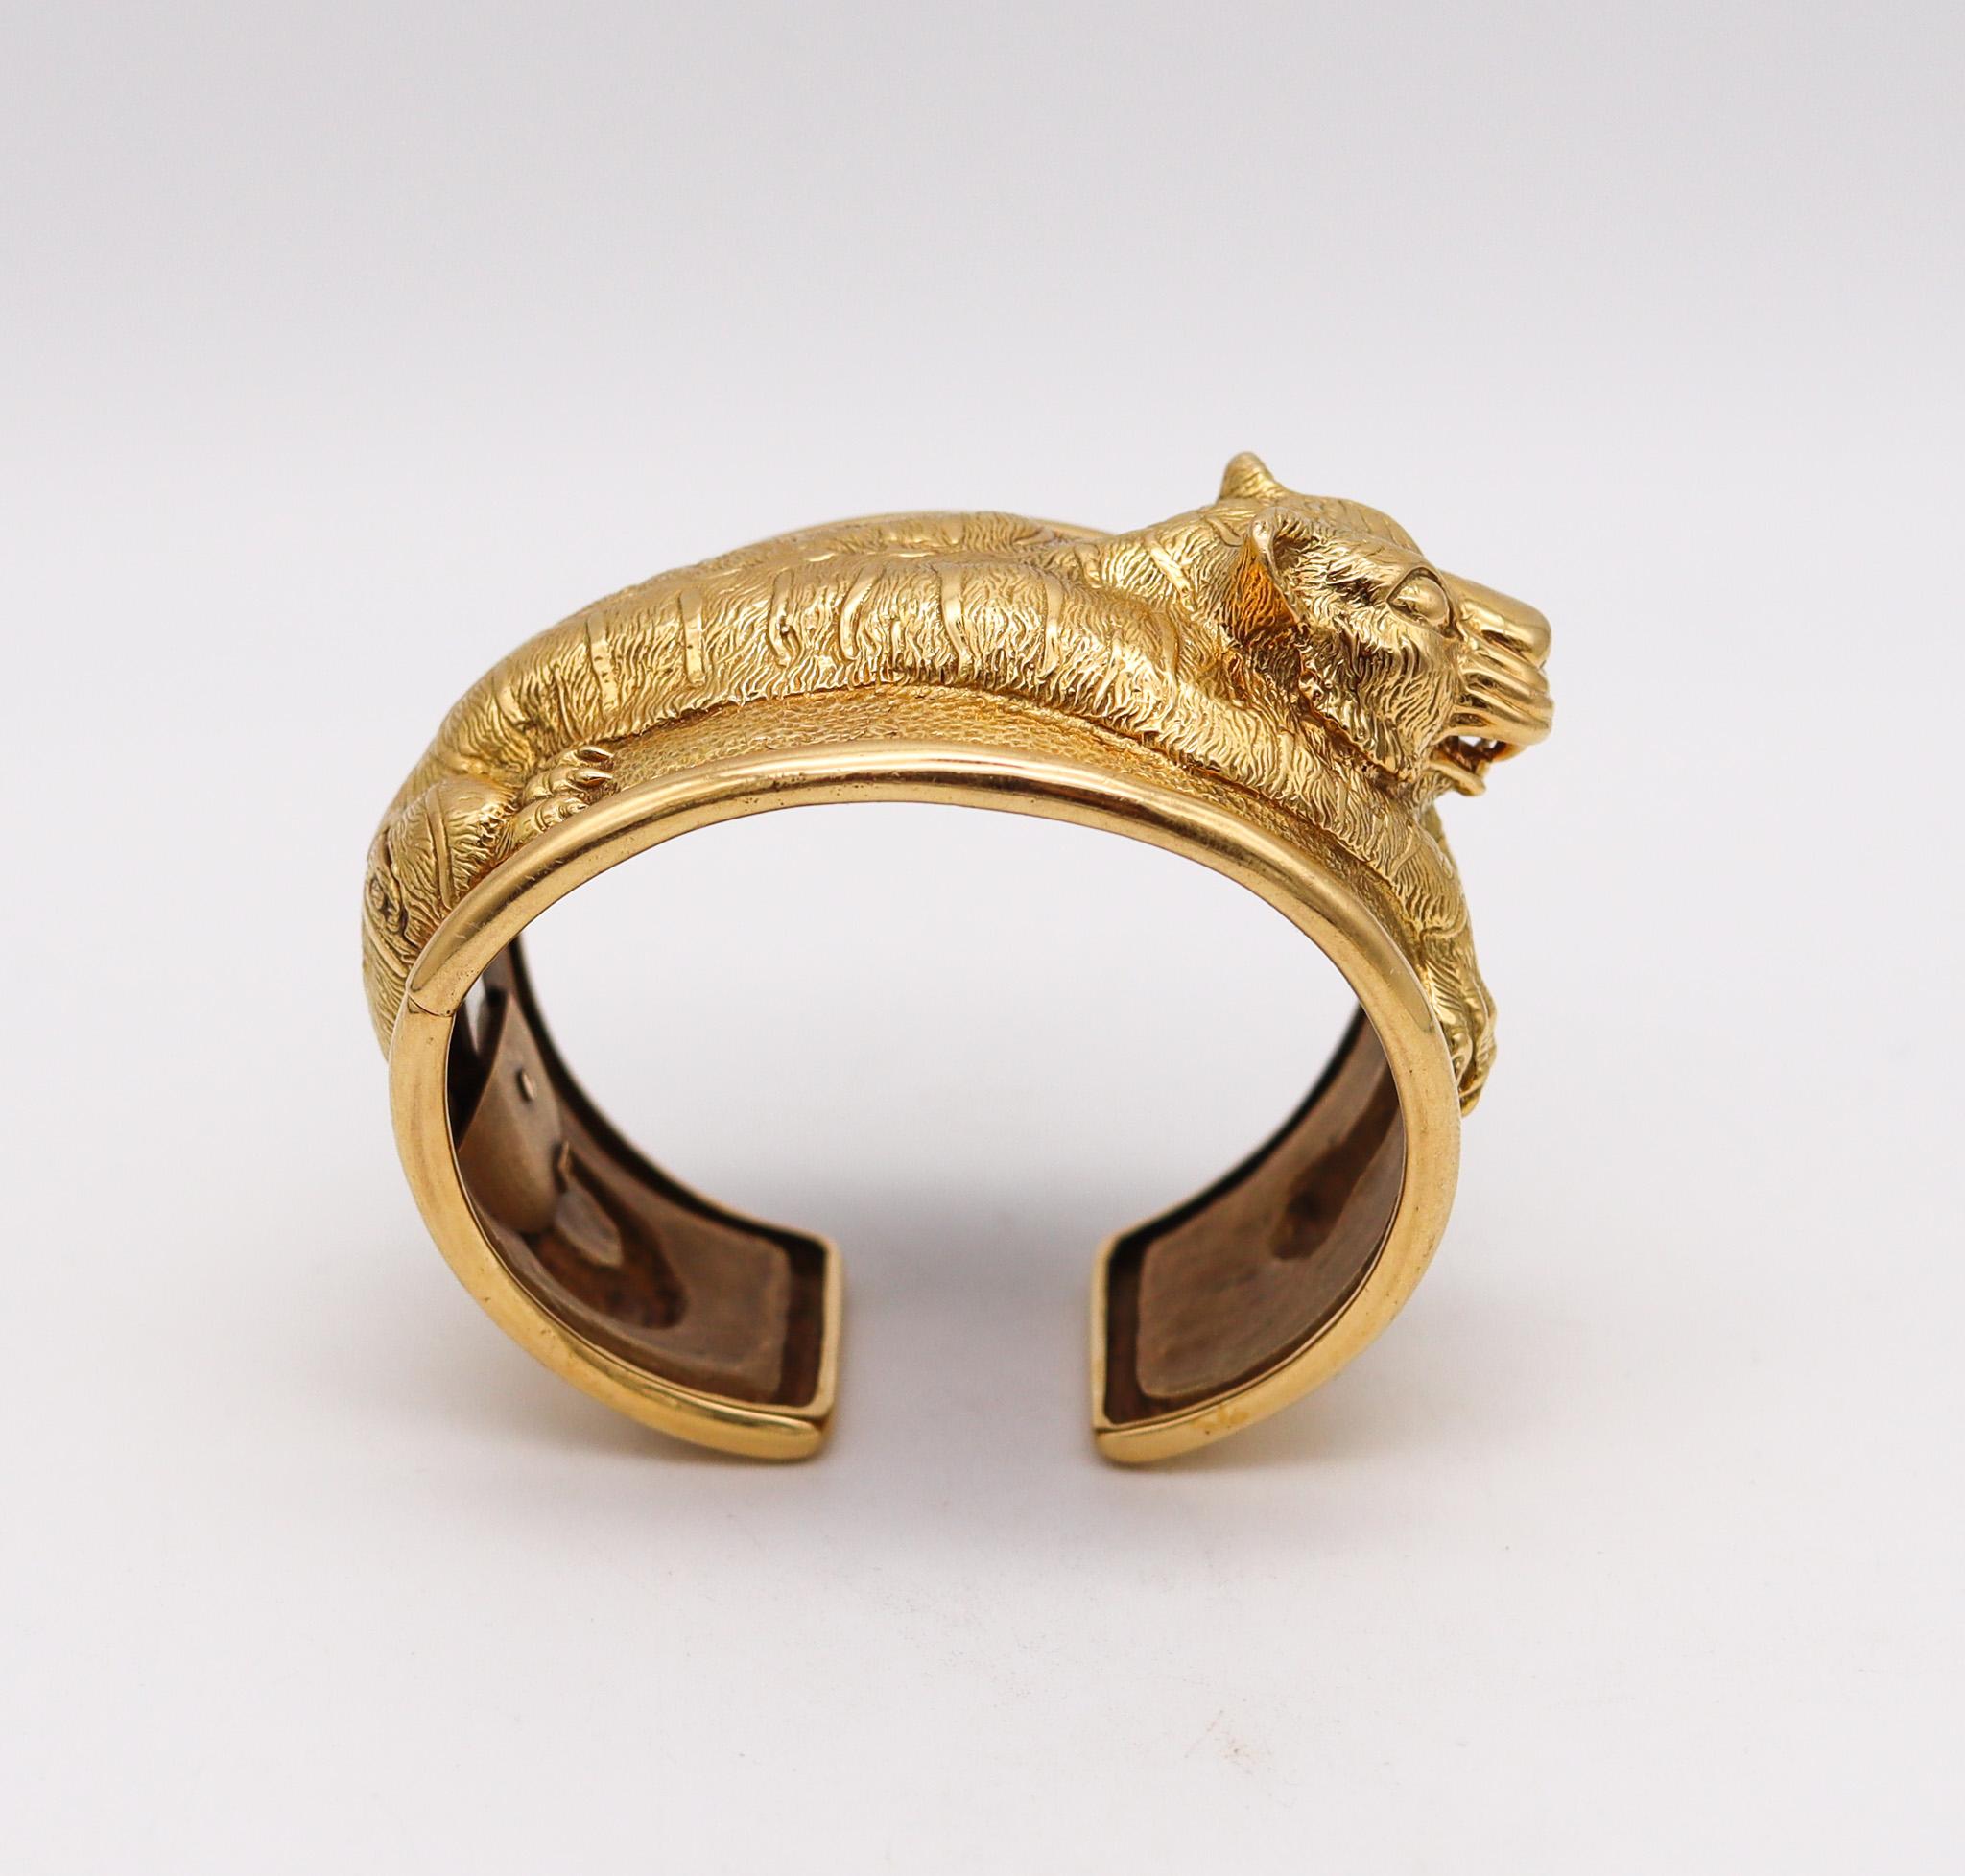 Modernist Craig Drake Vintage Tiger Cuff Bracelet in Textured Solid 18kt Yellow Gold